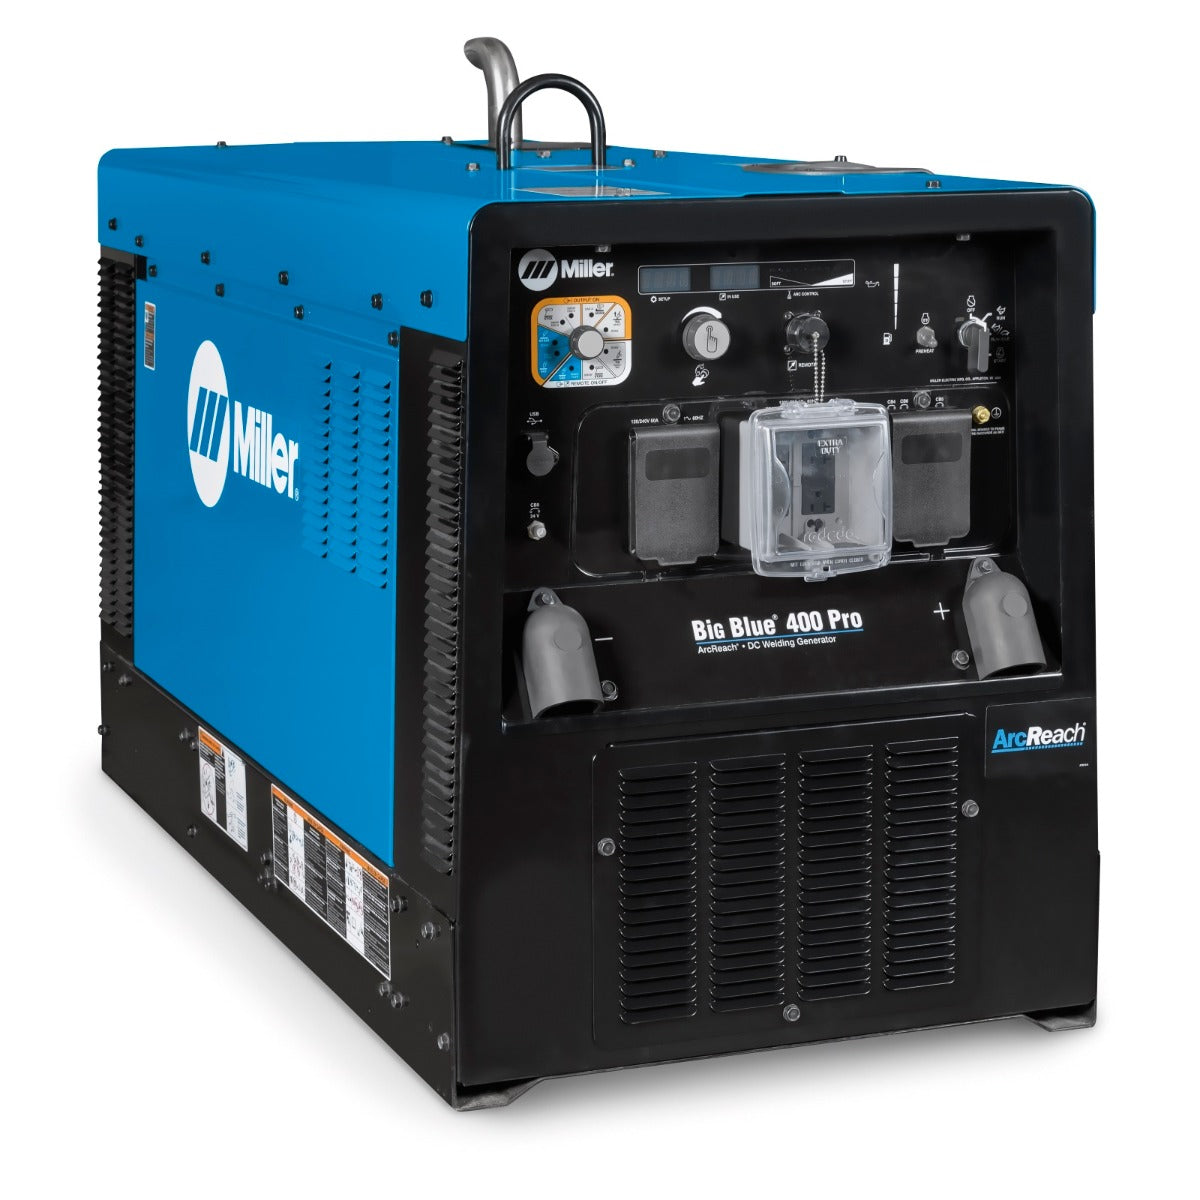 Miller Big Blue 400 Pro ArcReach Kubota Welder/Generator (907732001)